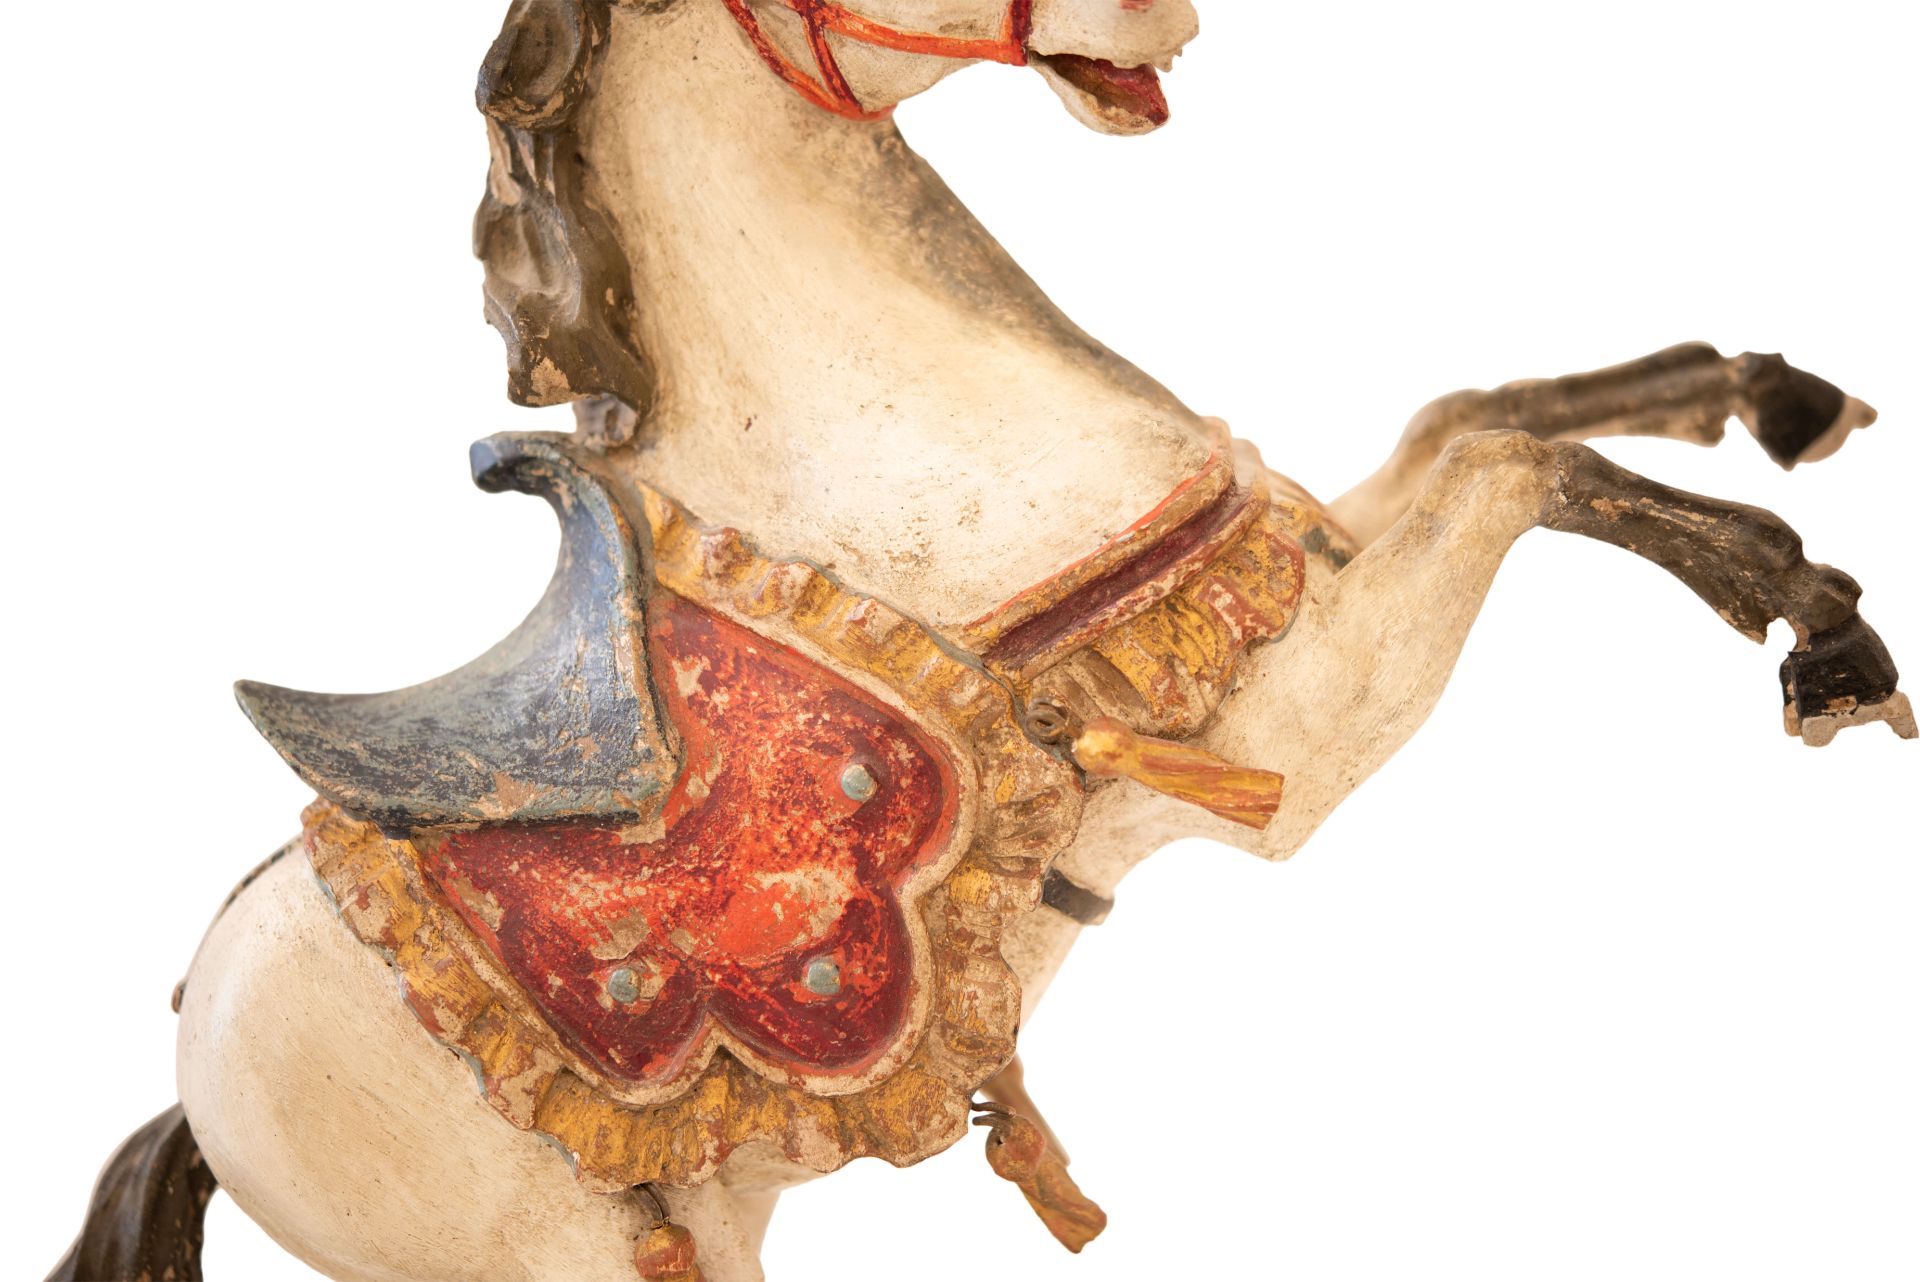 Holzpferd auf Plinthe |Wooden Horse on Plinth - Image 3 of 5